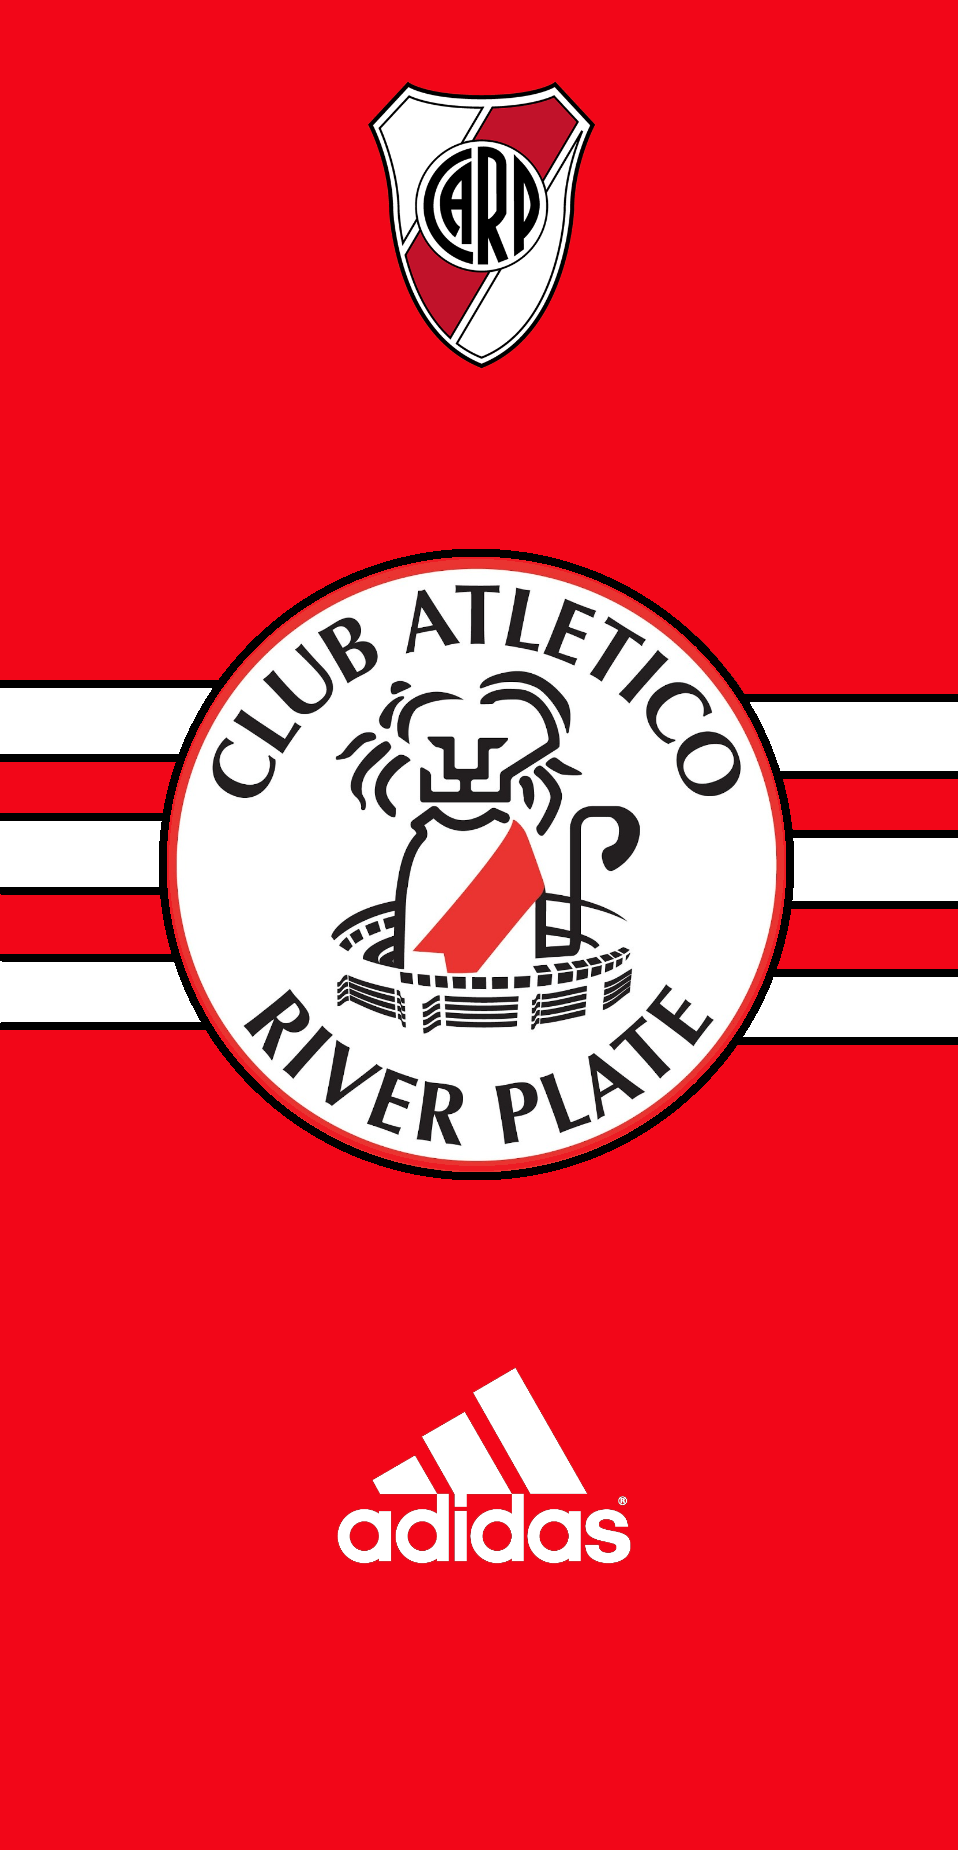 River Plate ideas. club atlético river plate, river, argentina football